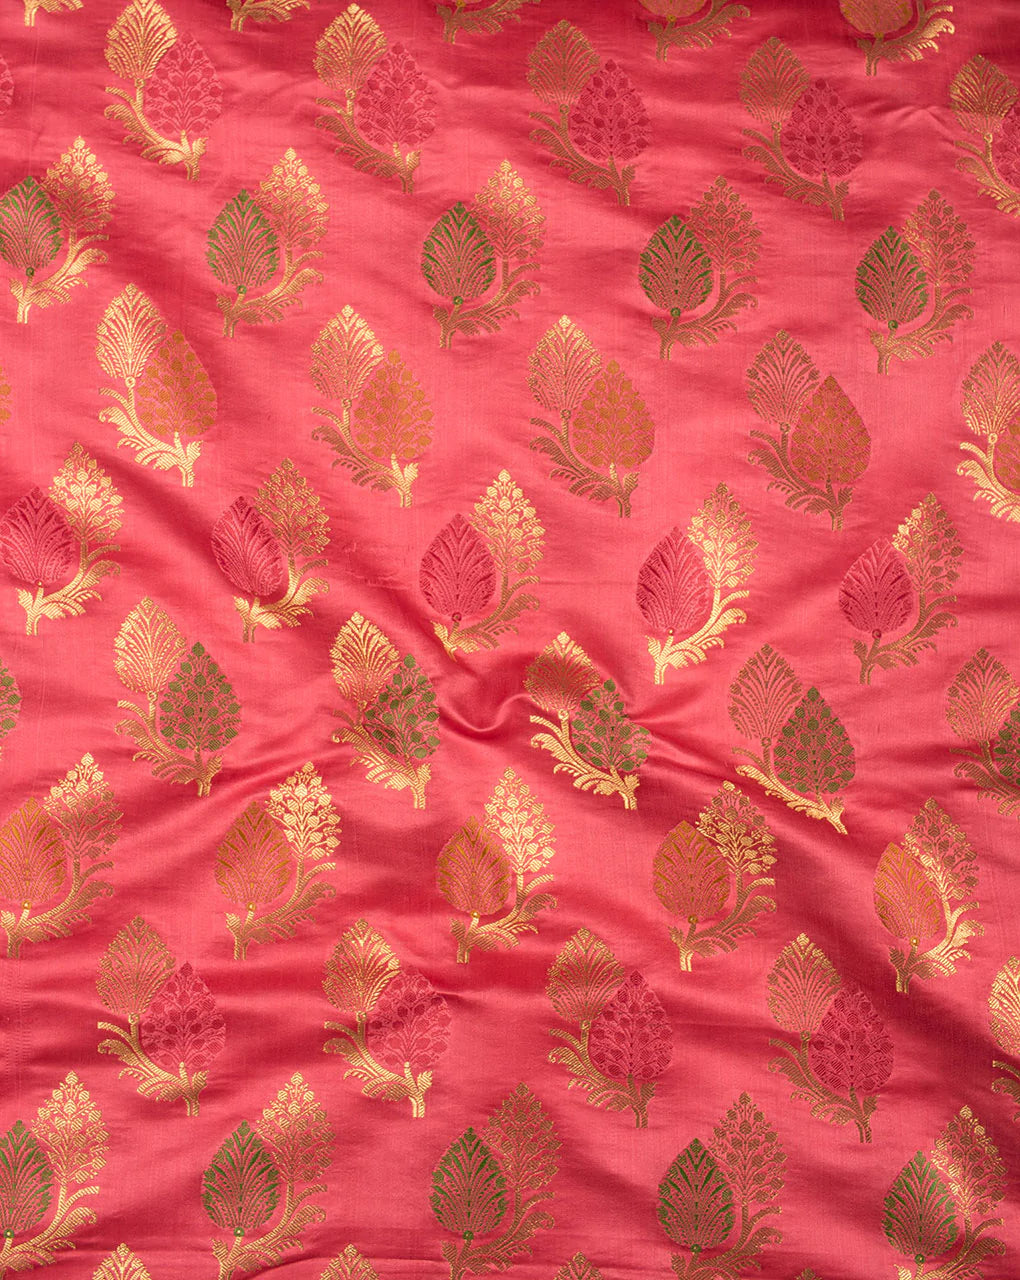 Woven Zari Jacquard Banarasi Satin Fabric - Fabriclore.com